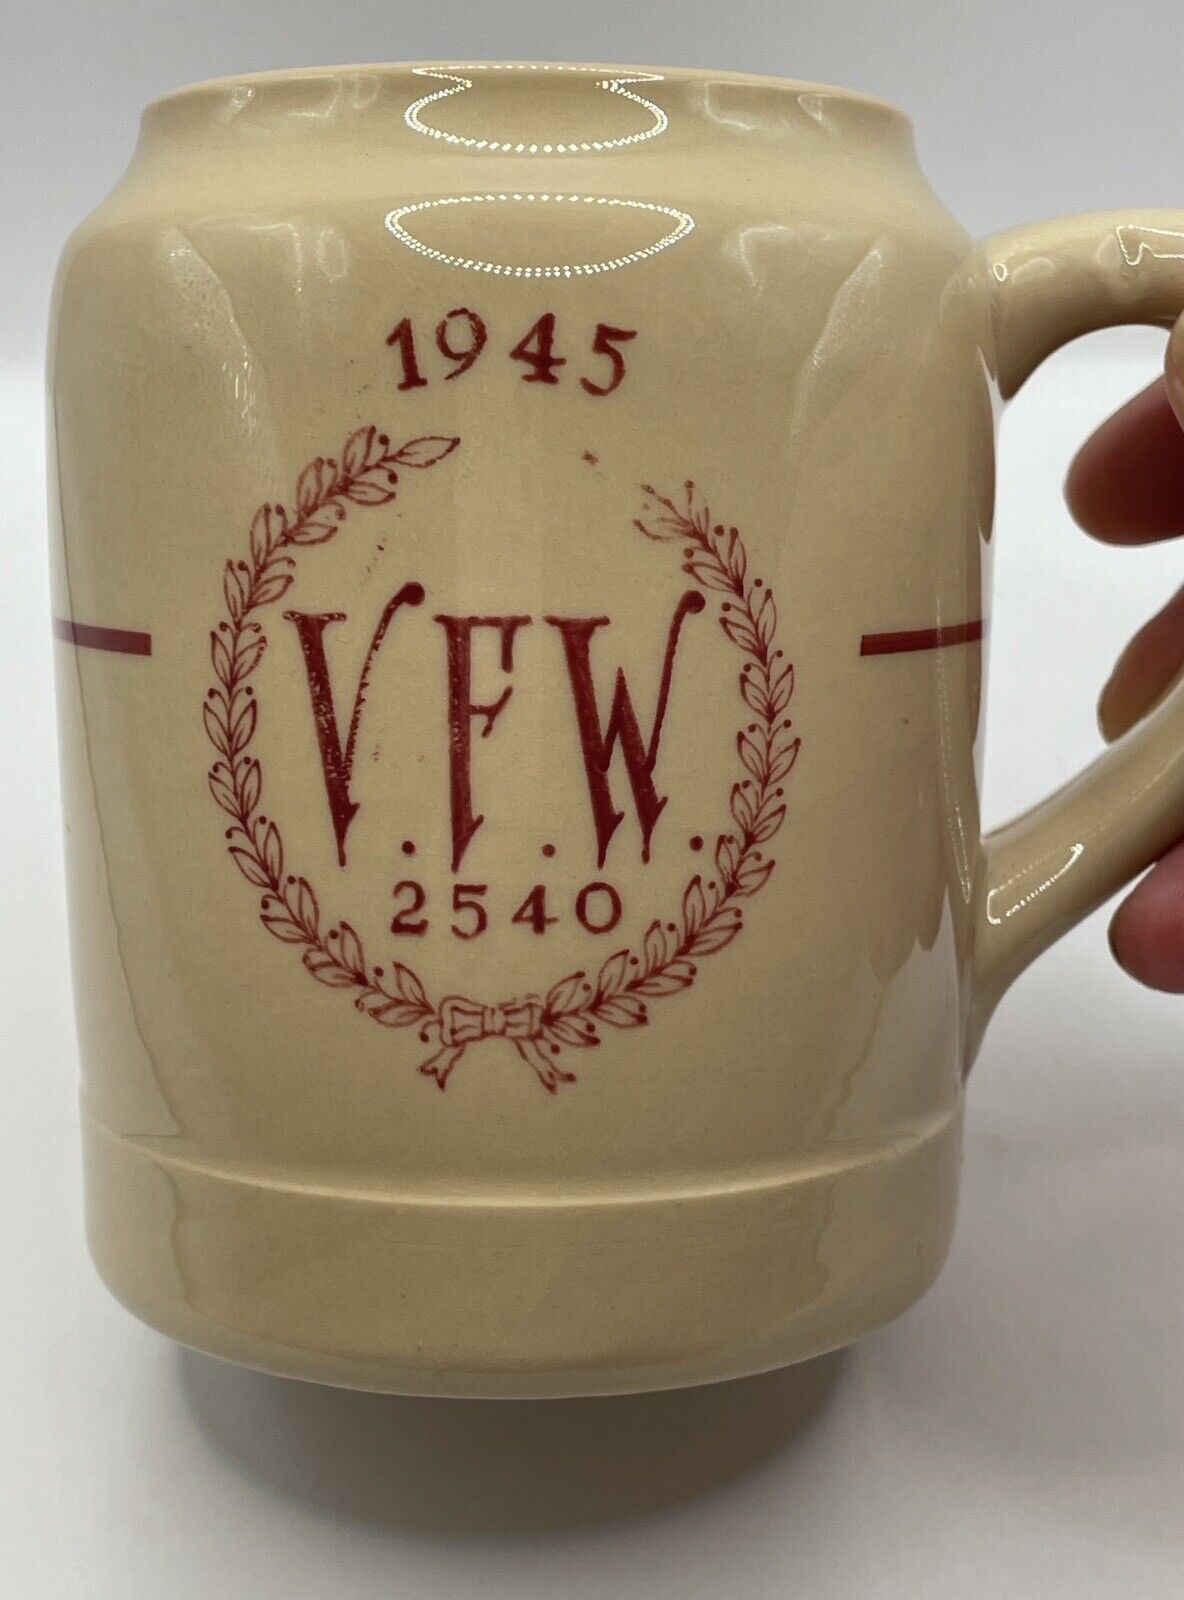 Vintage 1945 VFW Post 2540 Commemorative Mug Stein Walker China